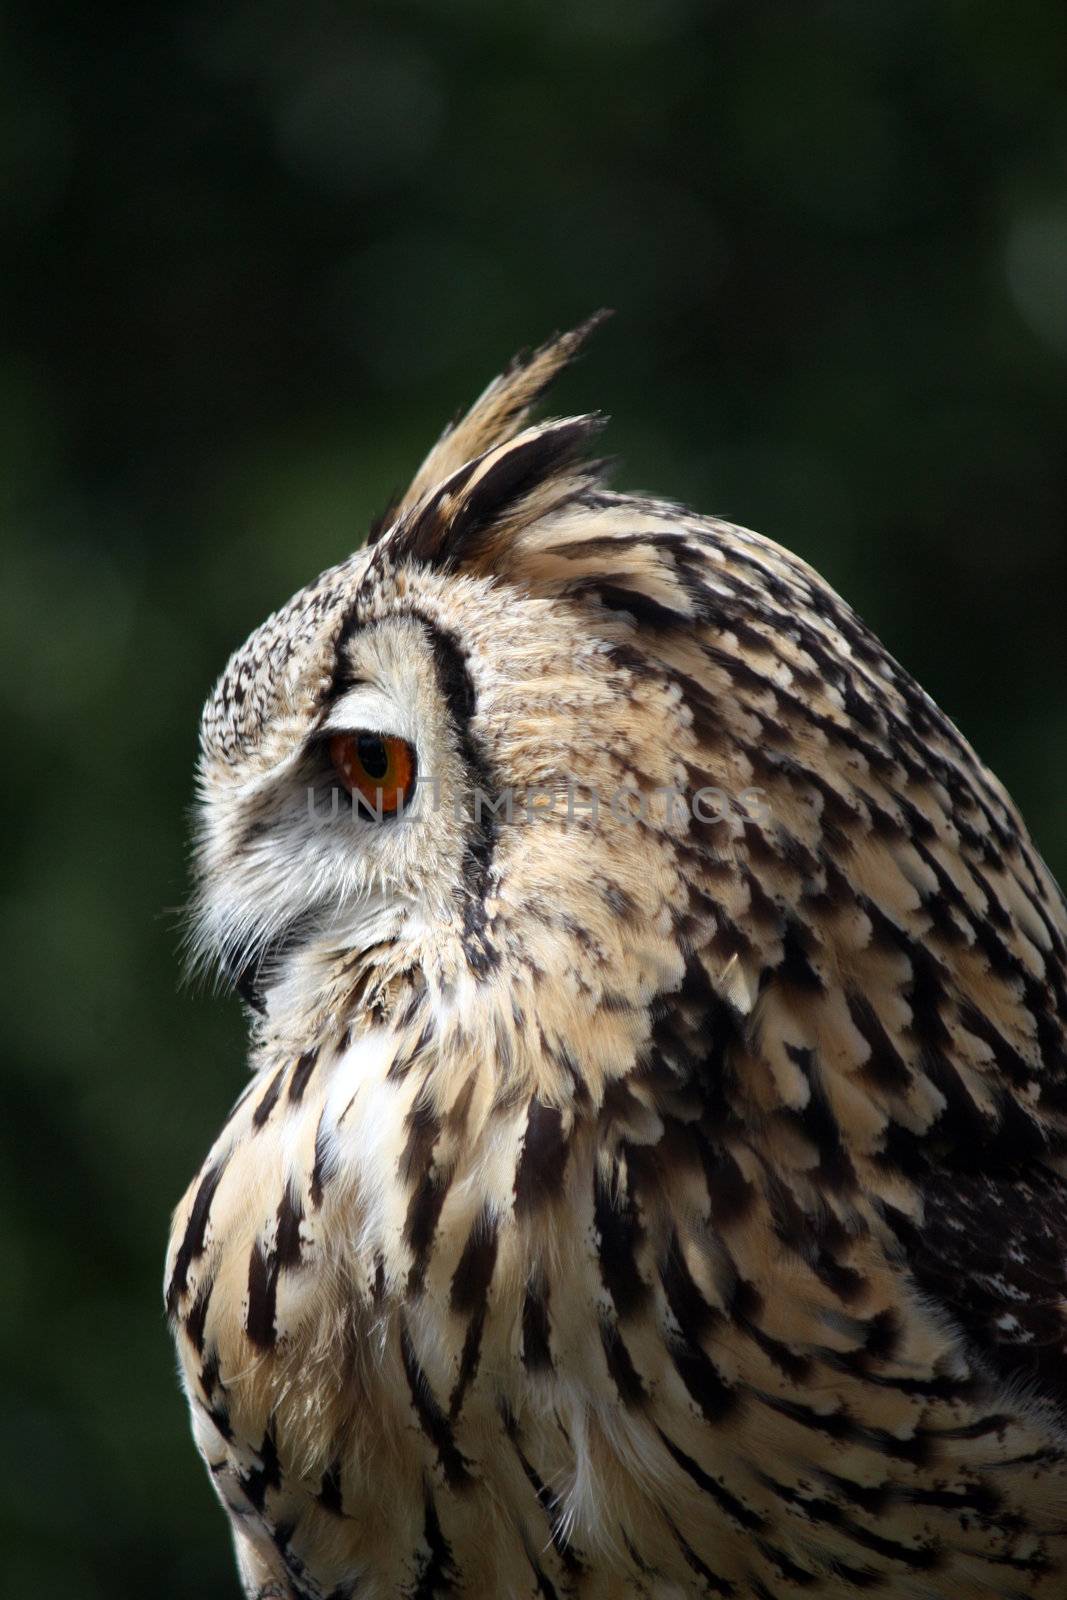 Horned owl by membio